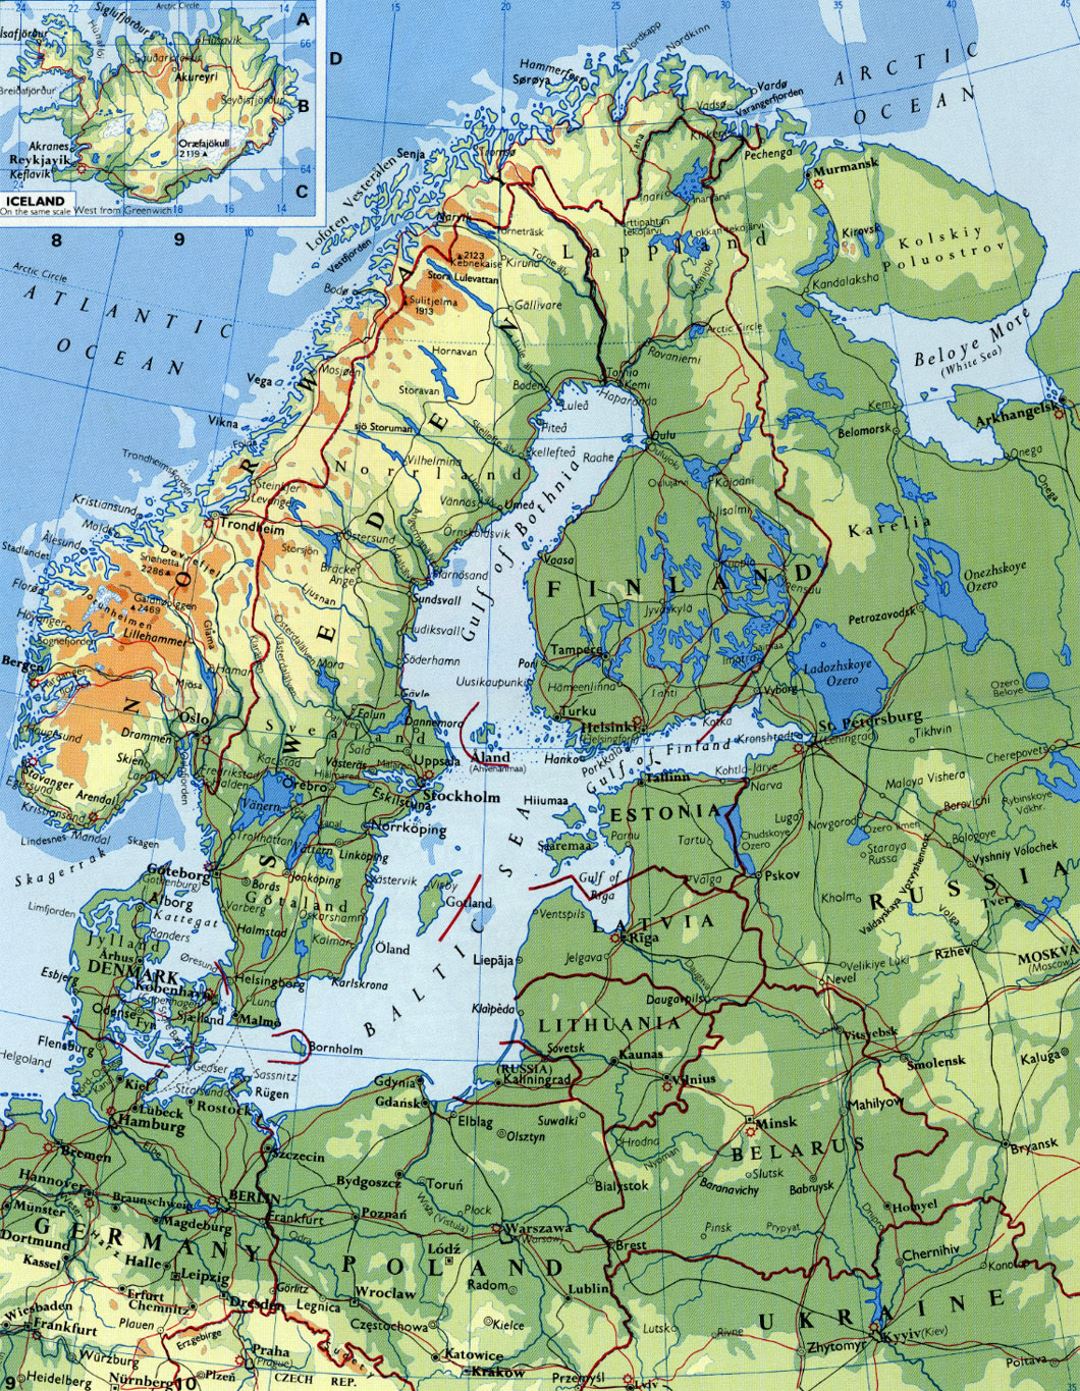 Detailed elevation map of Scandinavia